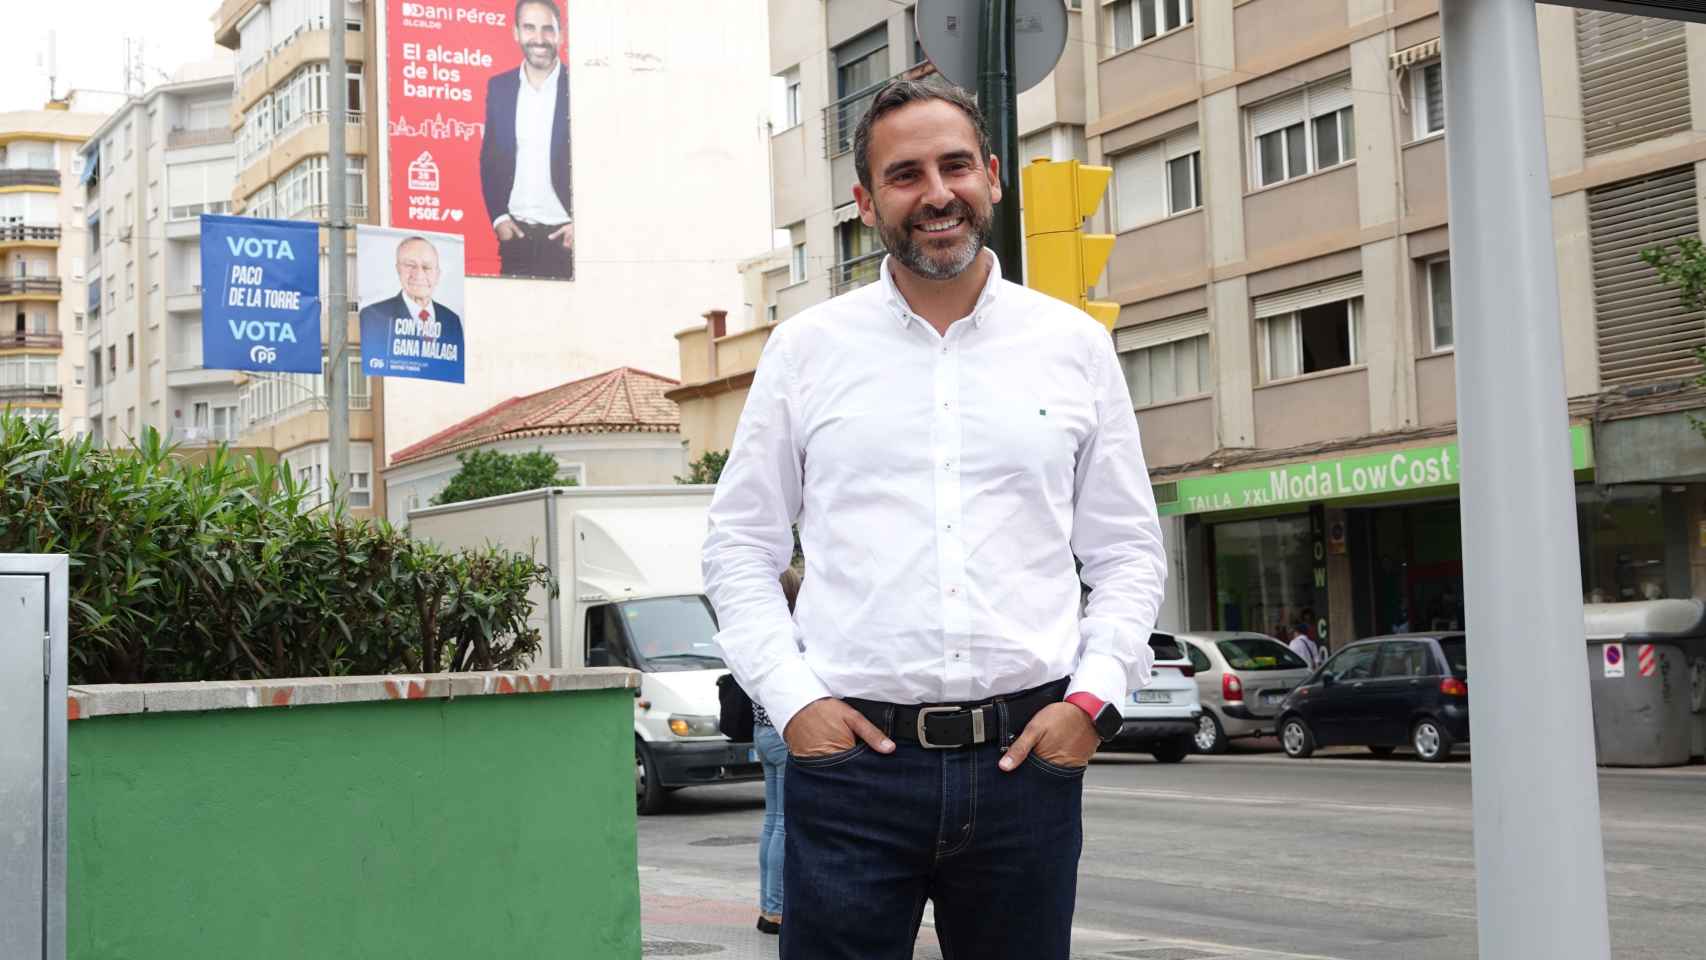 Daniel Pérez posa junto a los carteles electorales.